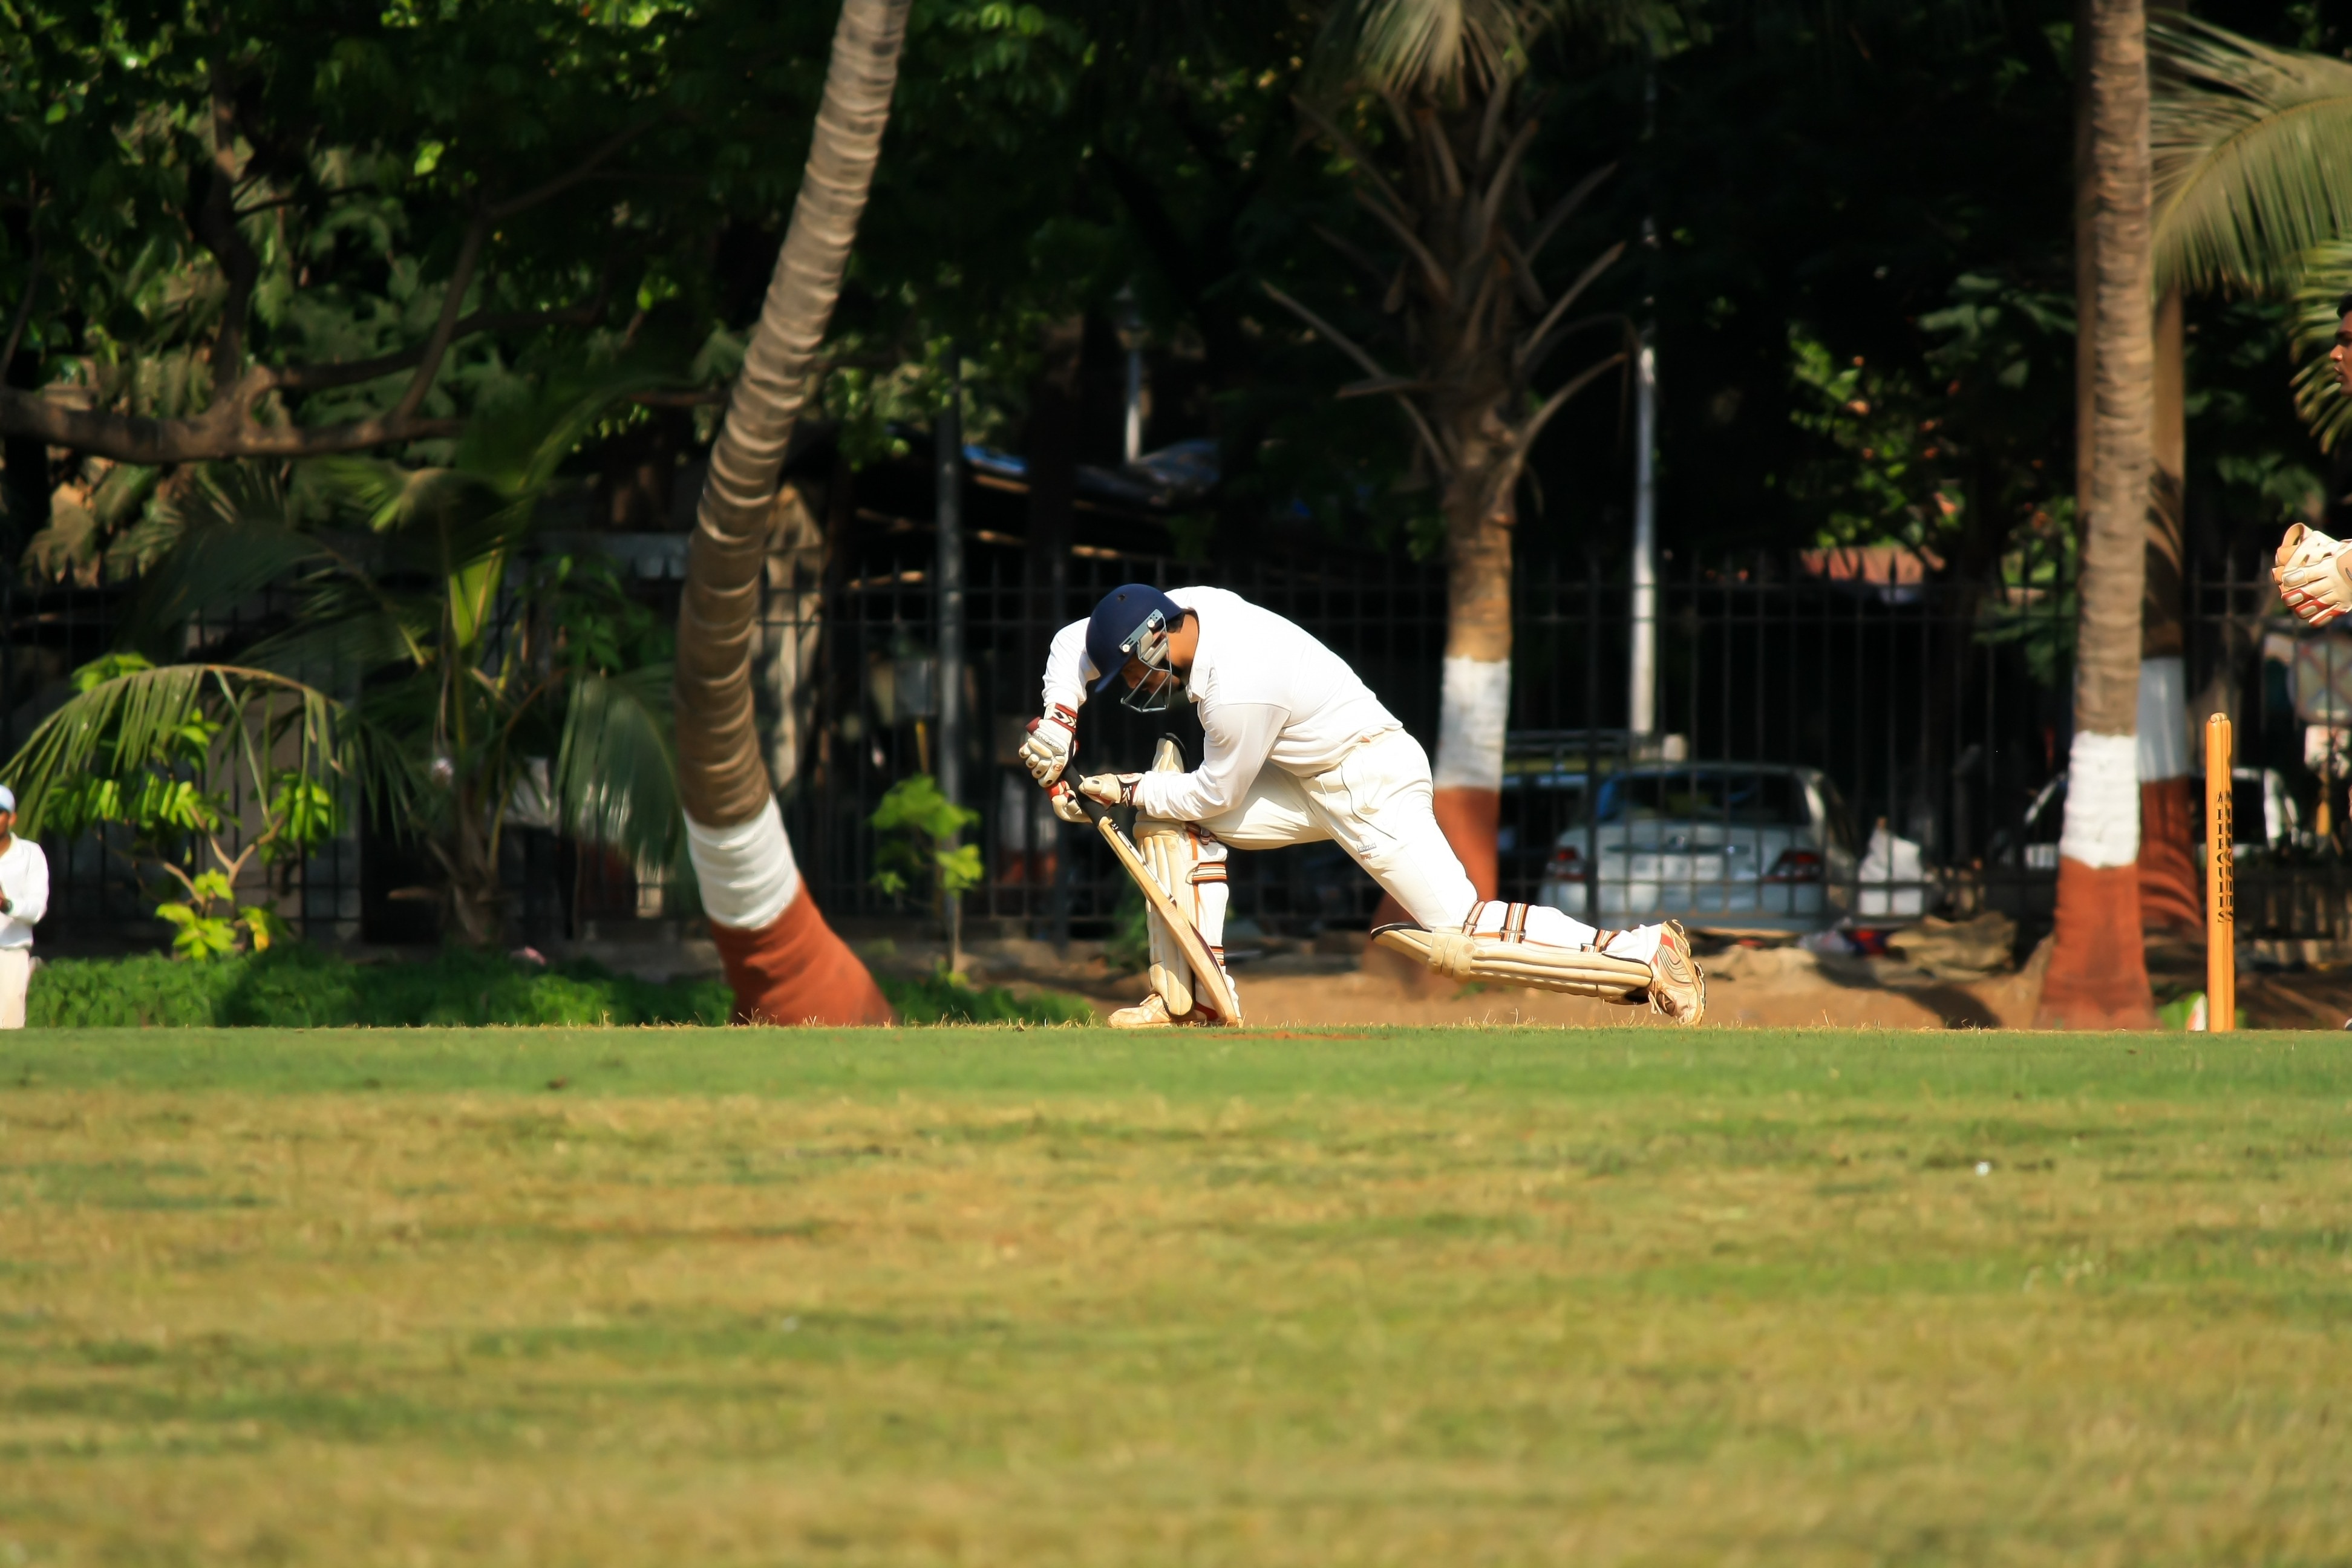 shallow focus photography of baseball player holding baseball bat on green grass field during daytime